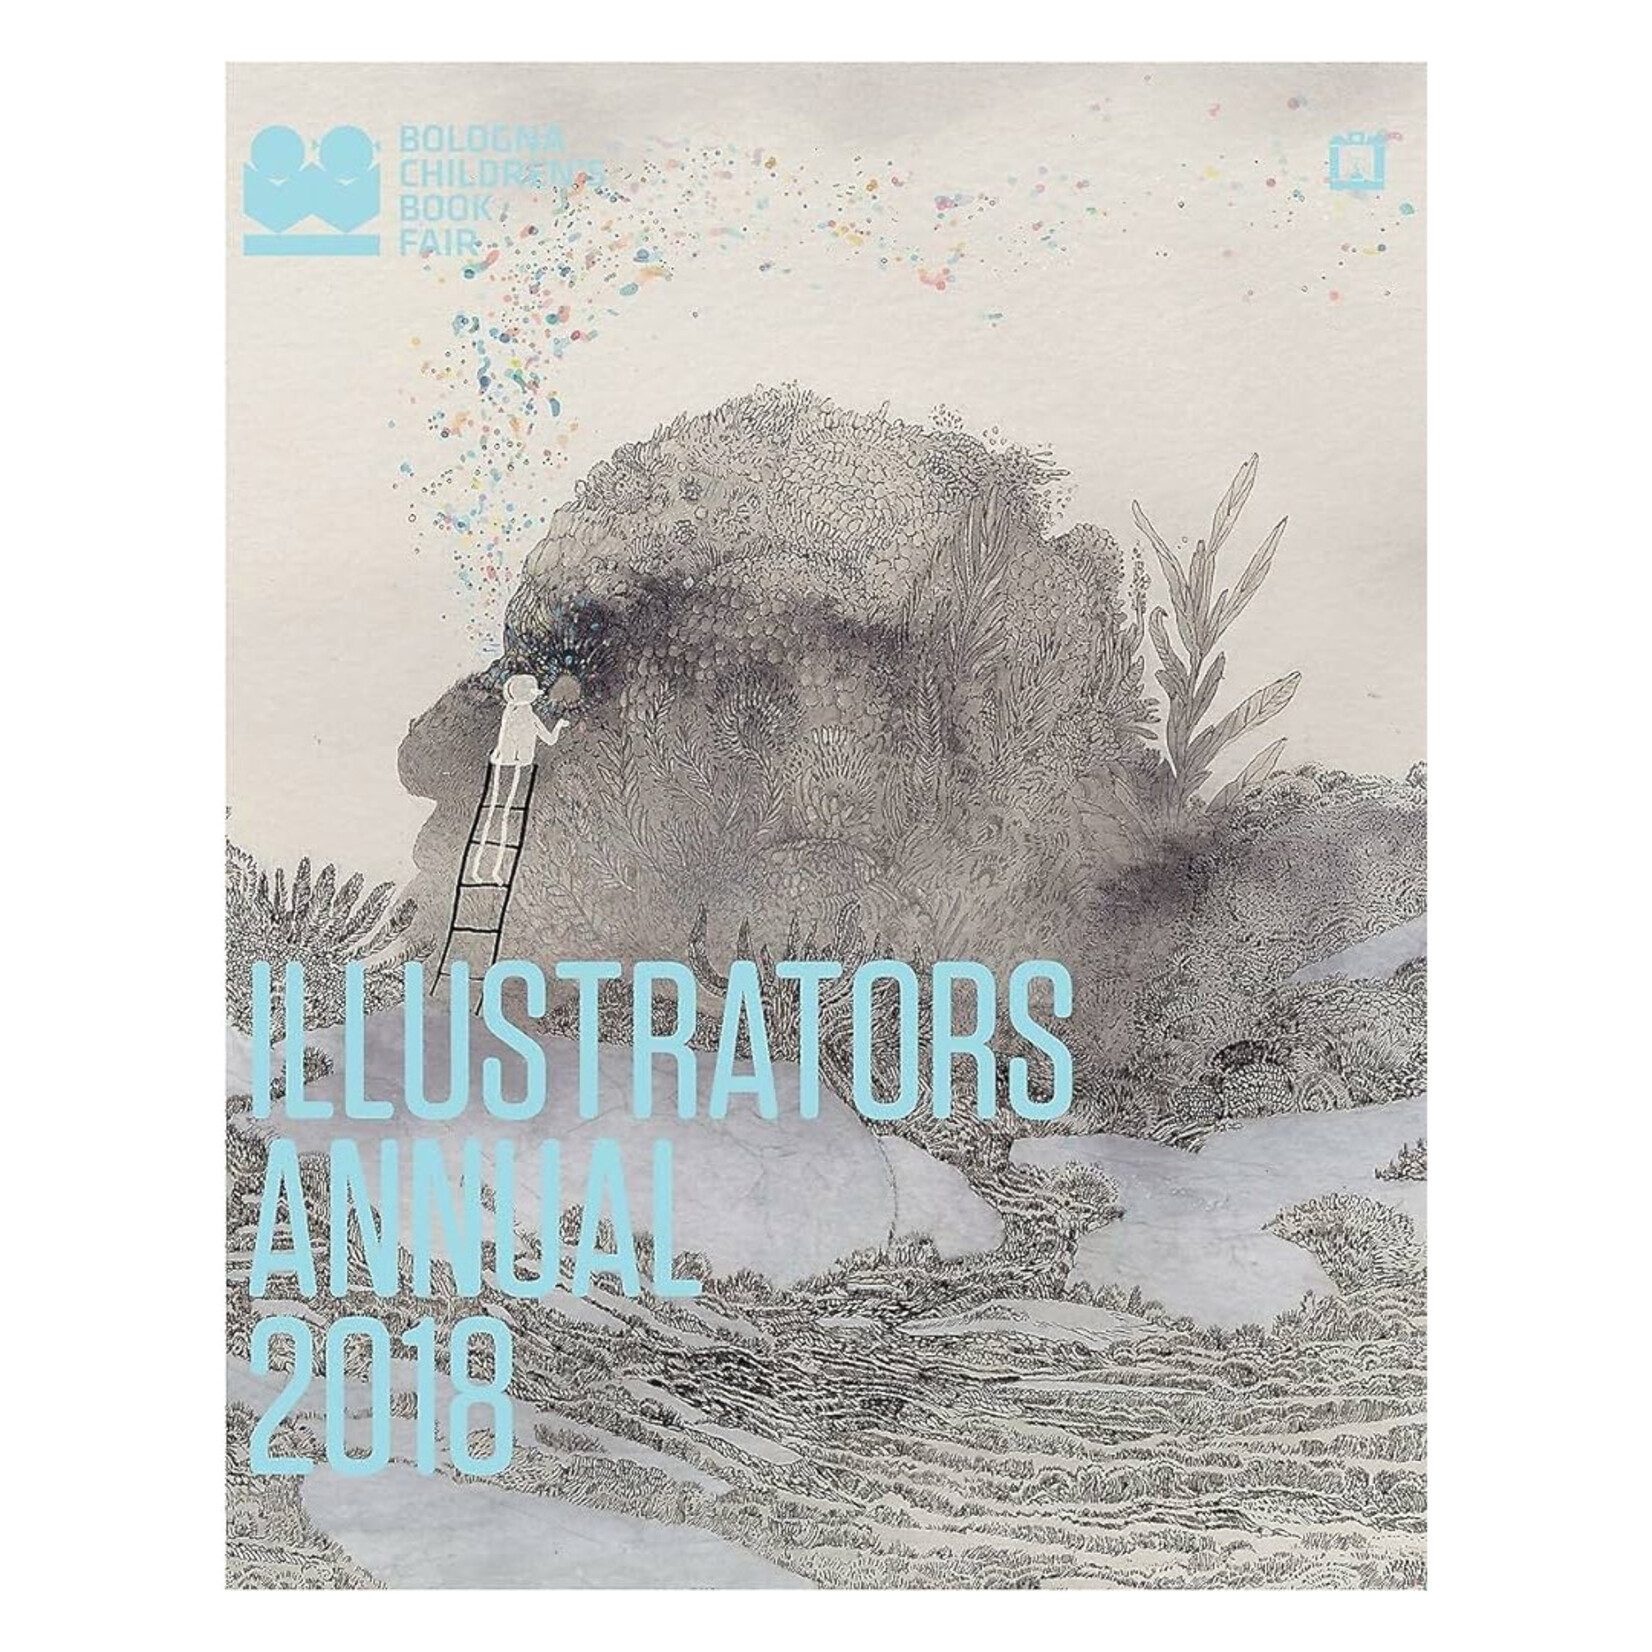 Illustrators Annual: 2018